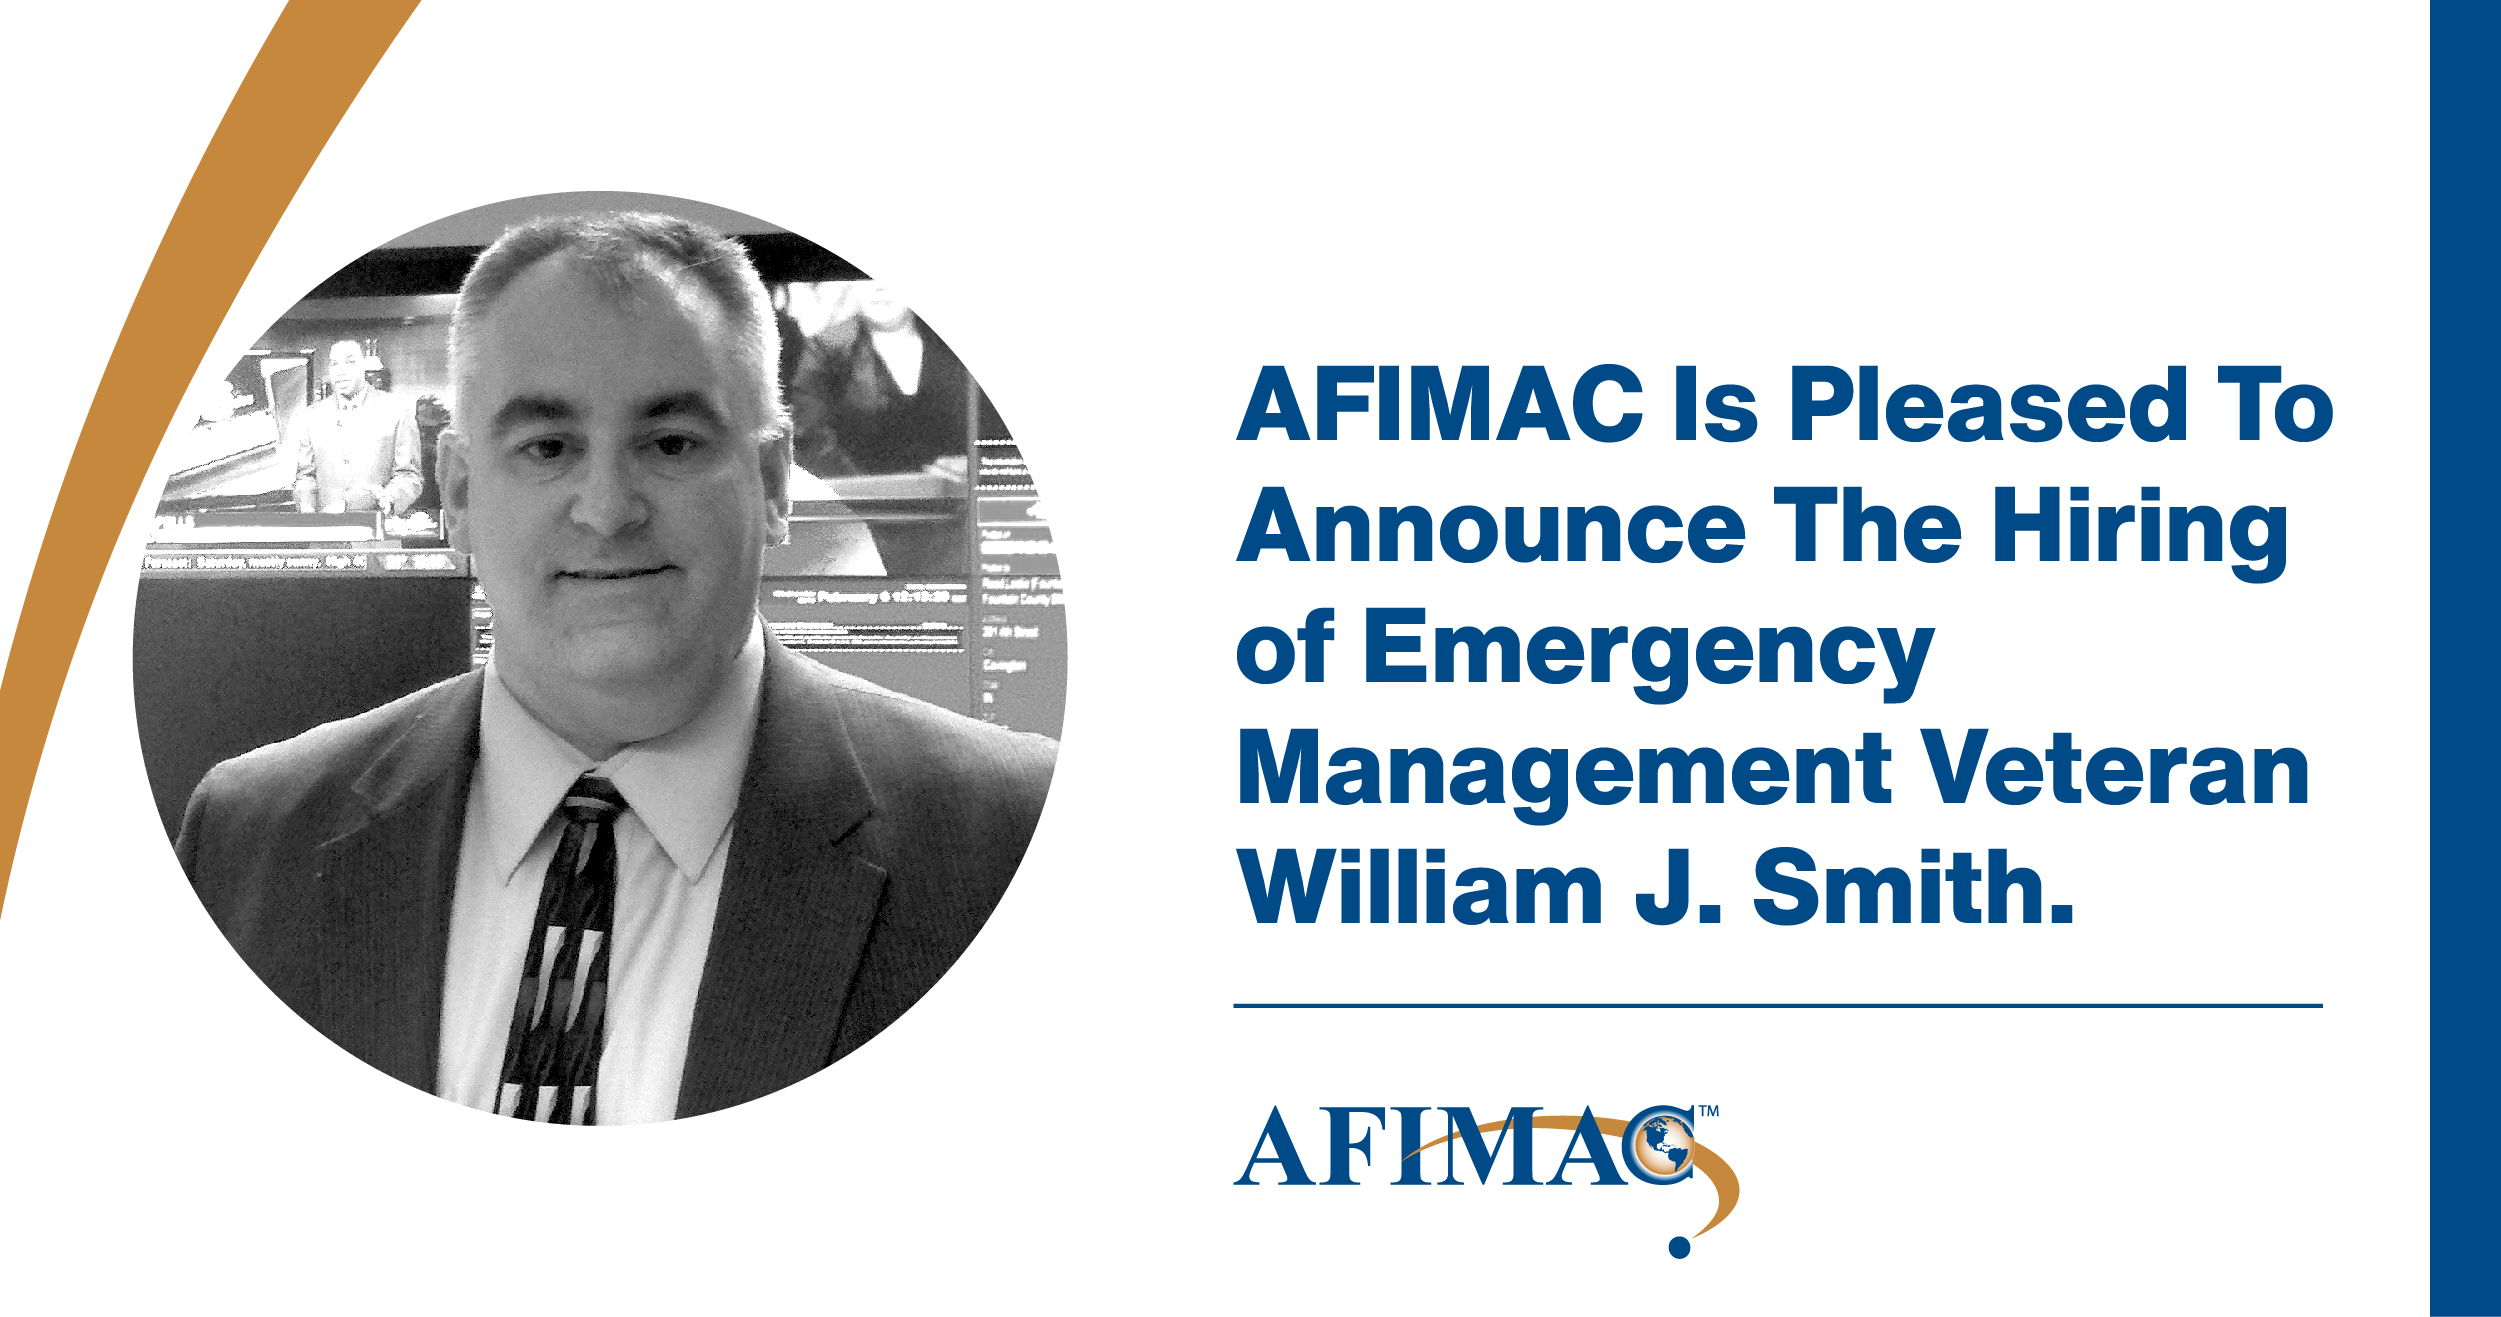 William J. Smith of AFIMAC